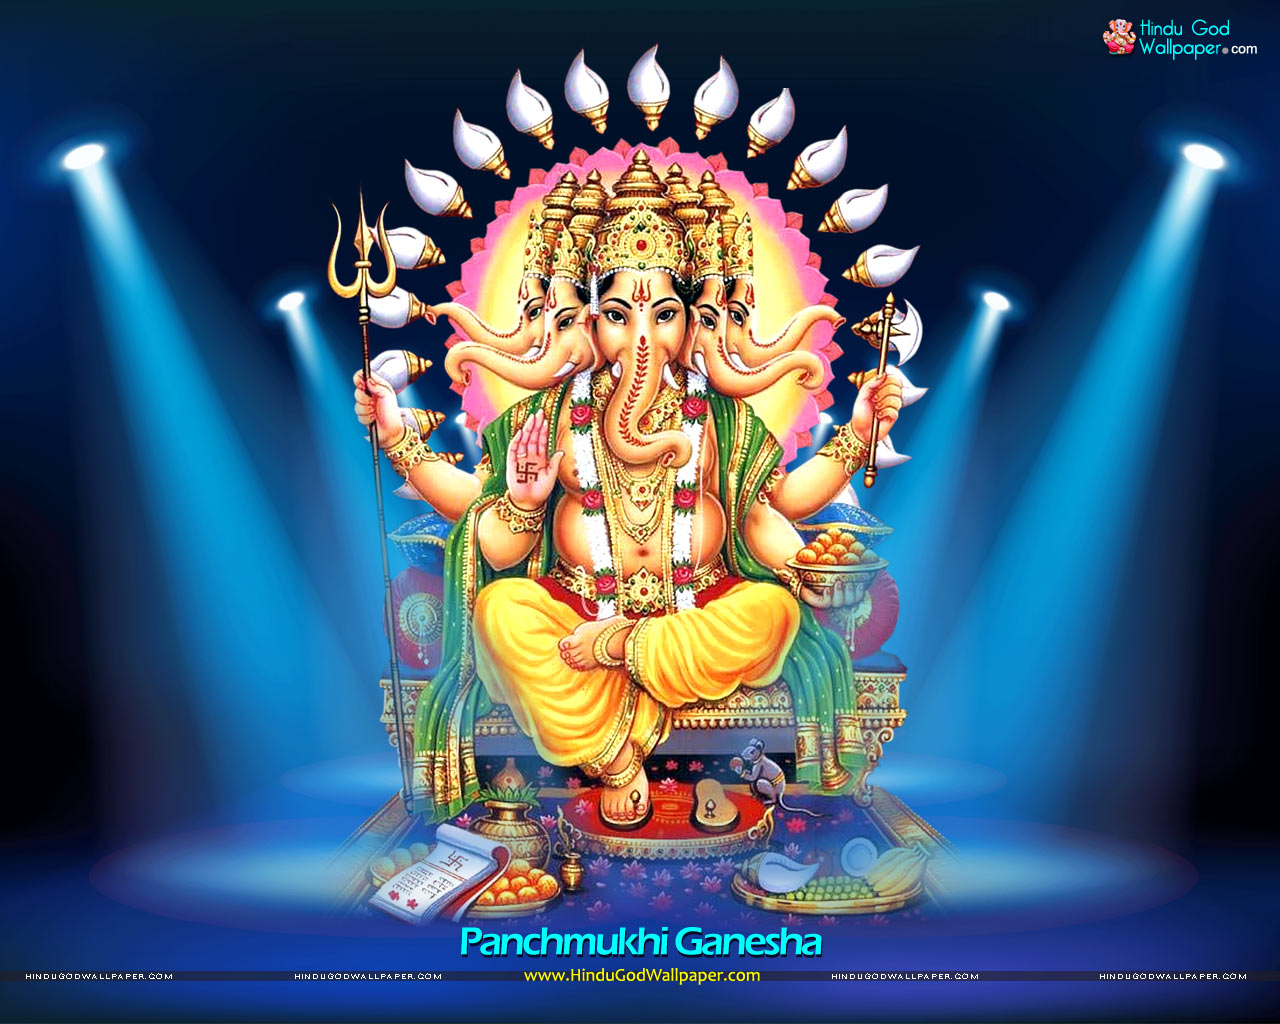 Panchmukhi Ganesha Wallpapers, Photos & Images Download